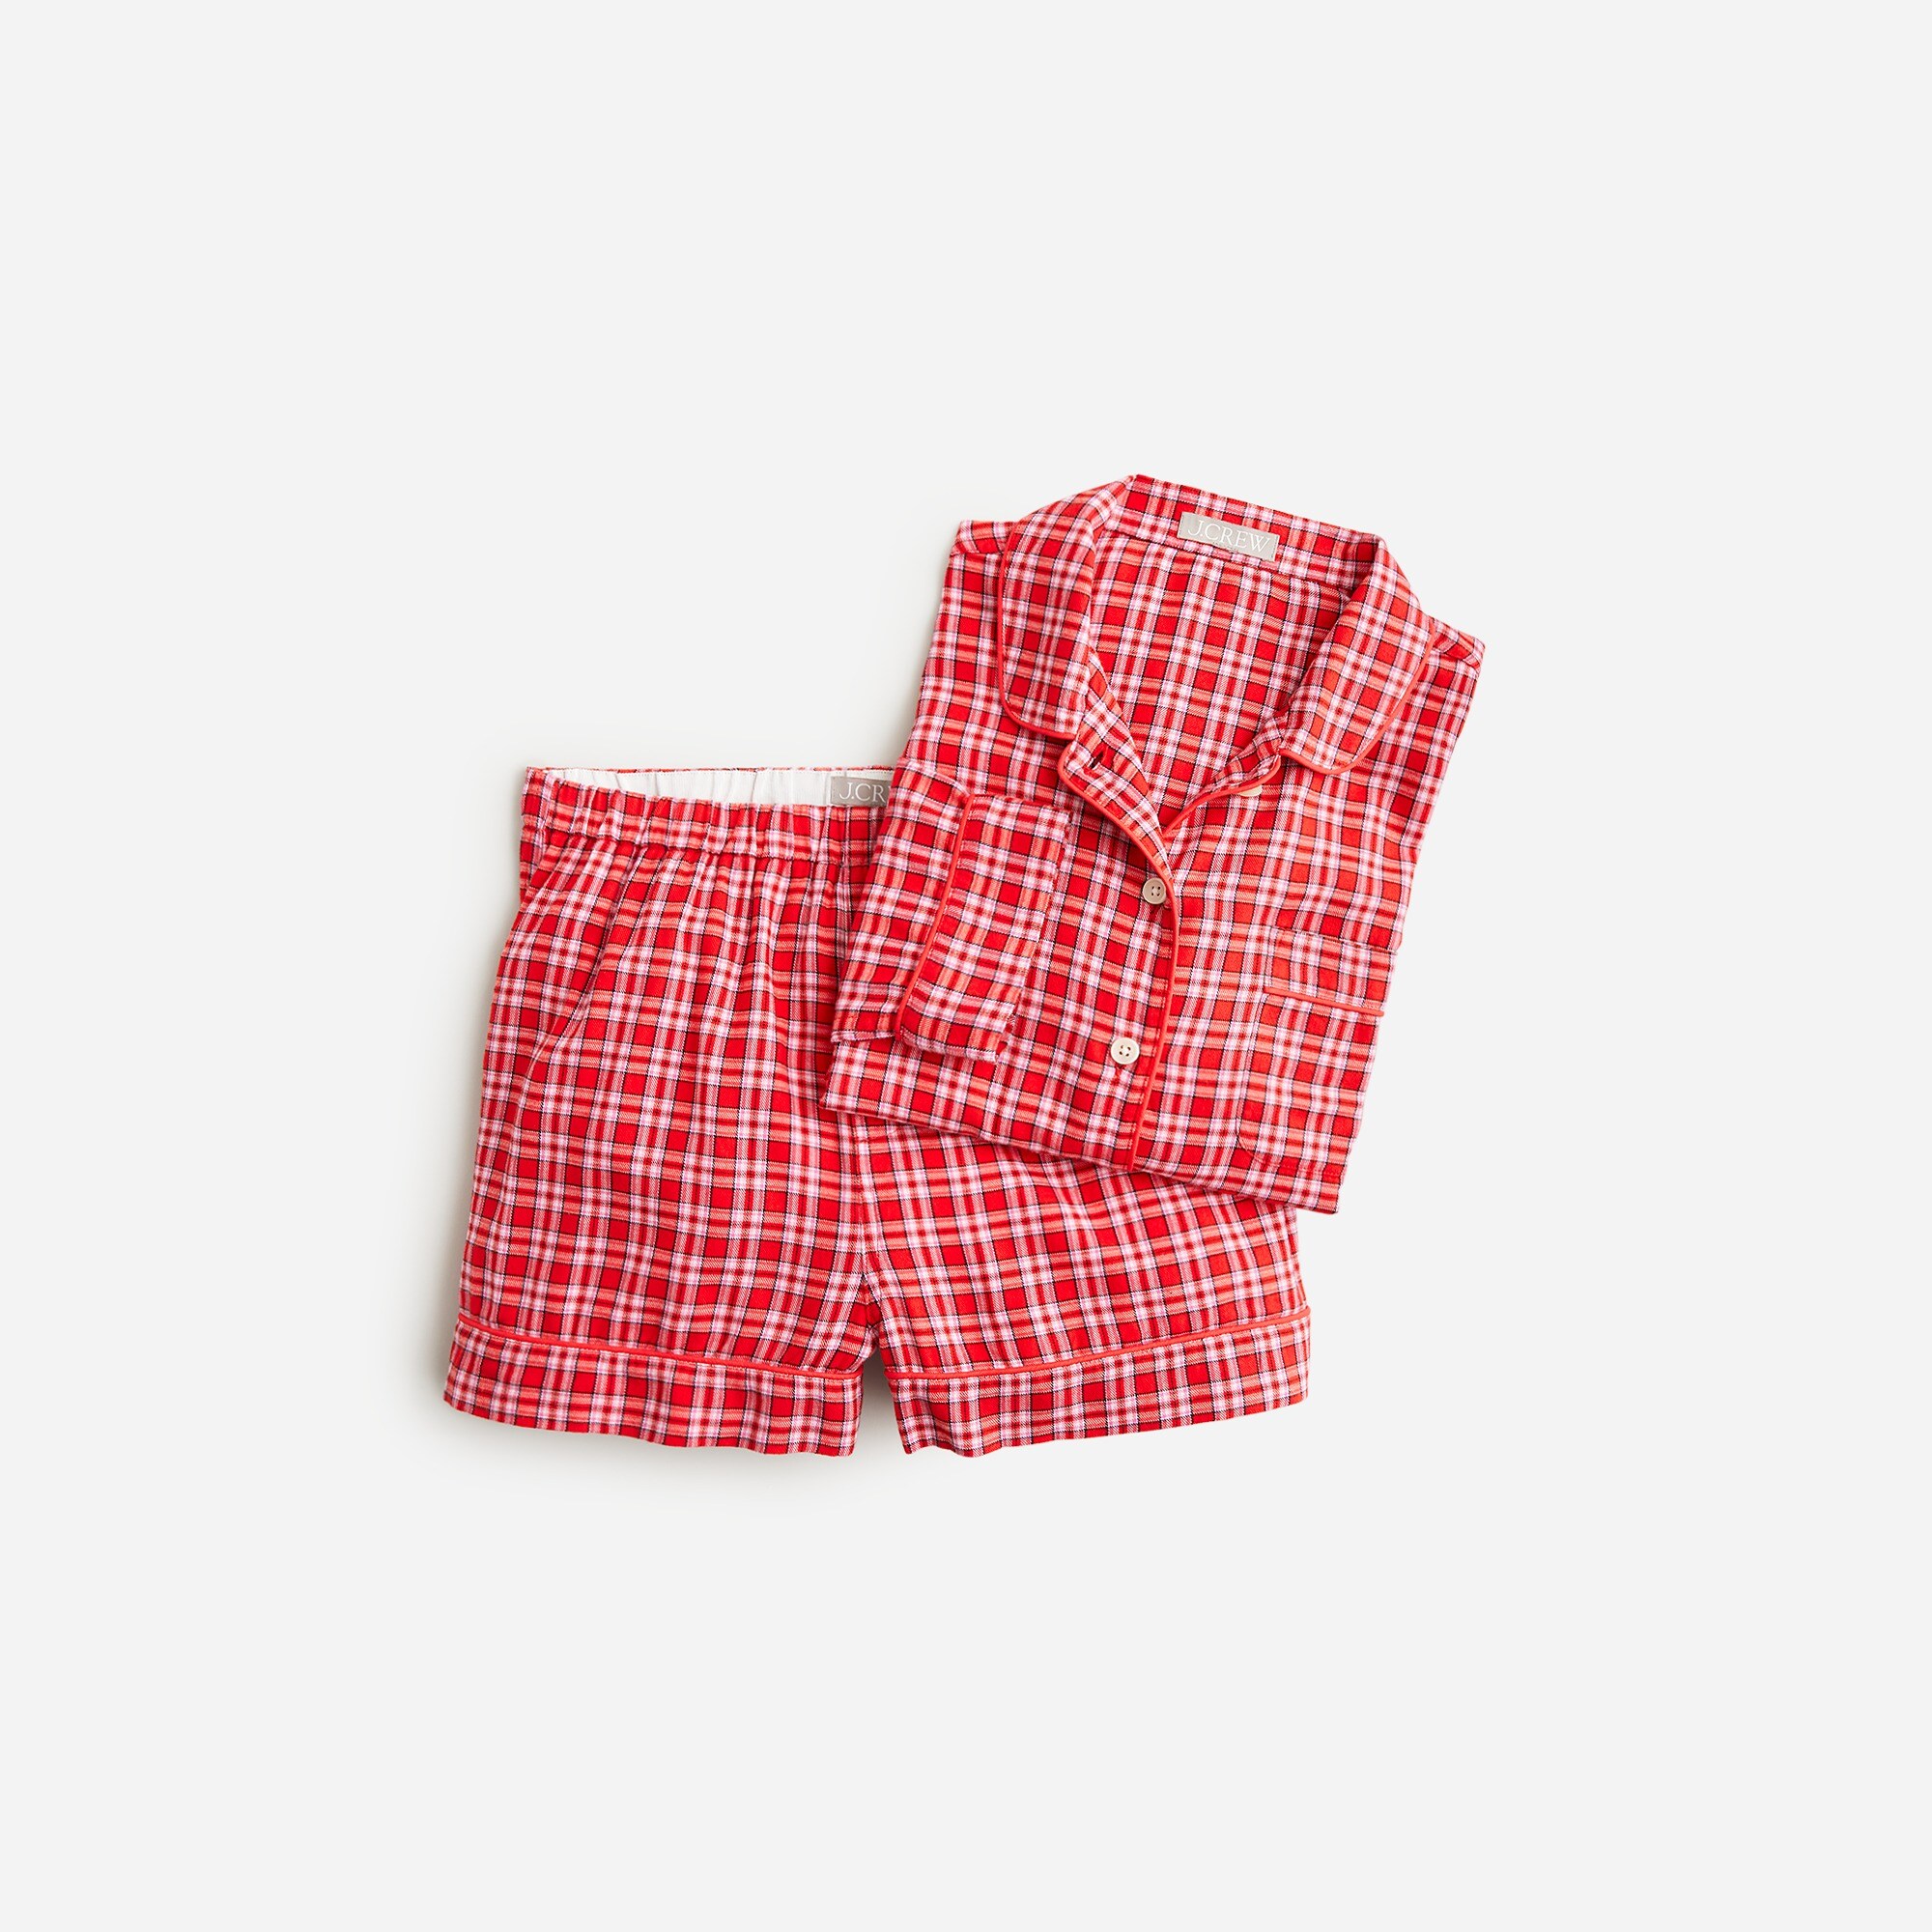  Long-sleeve pajama short set in tartan flannel